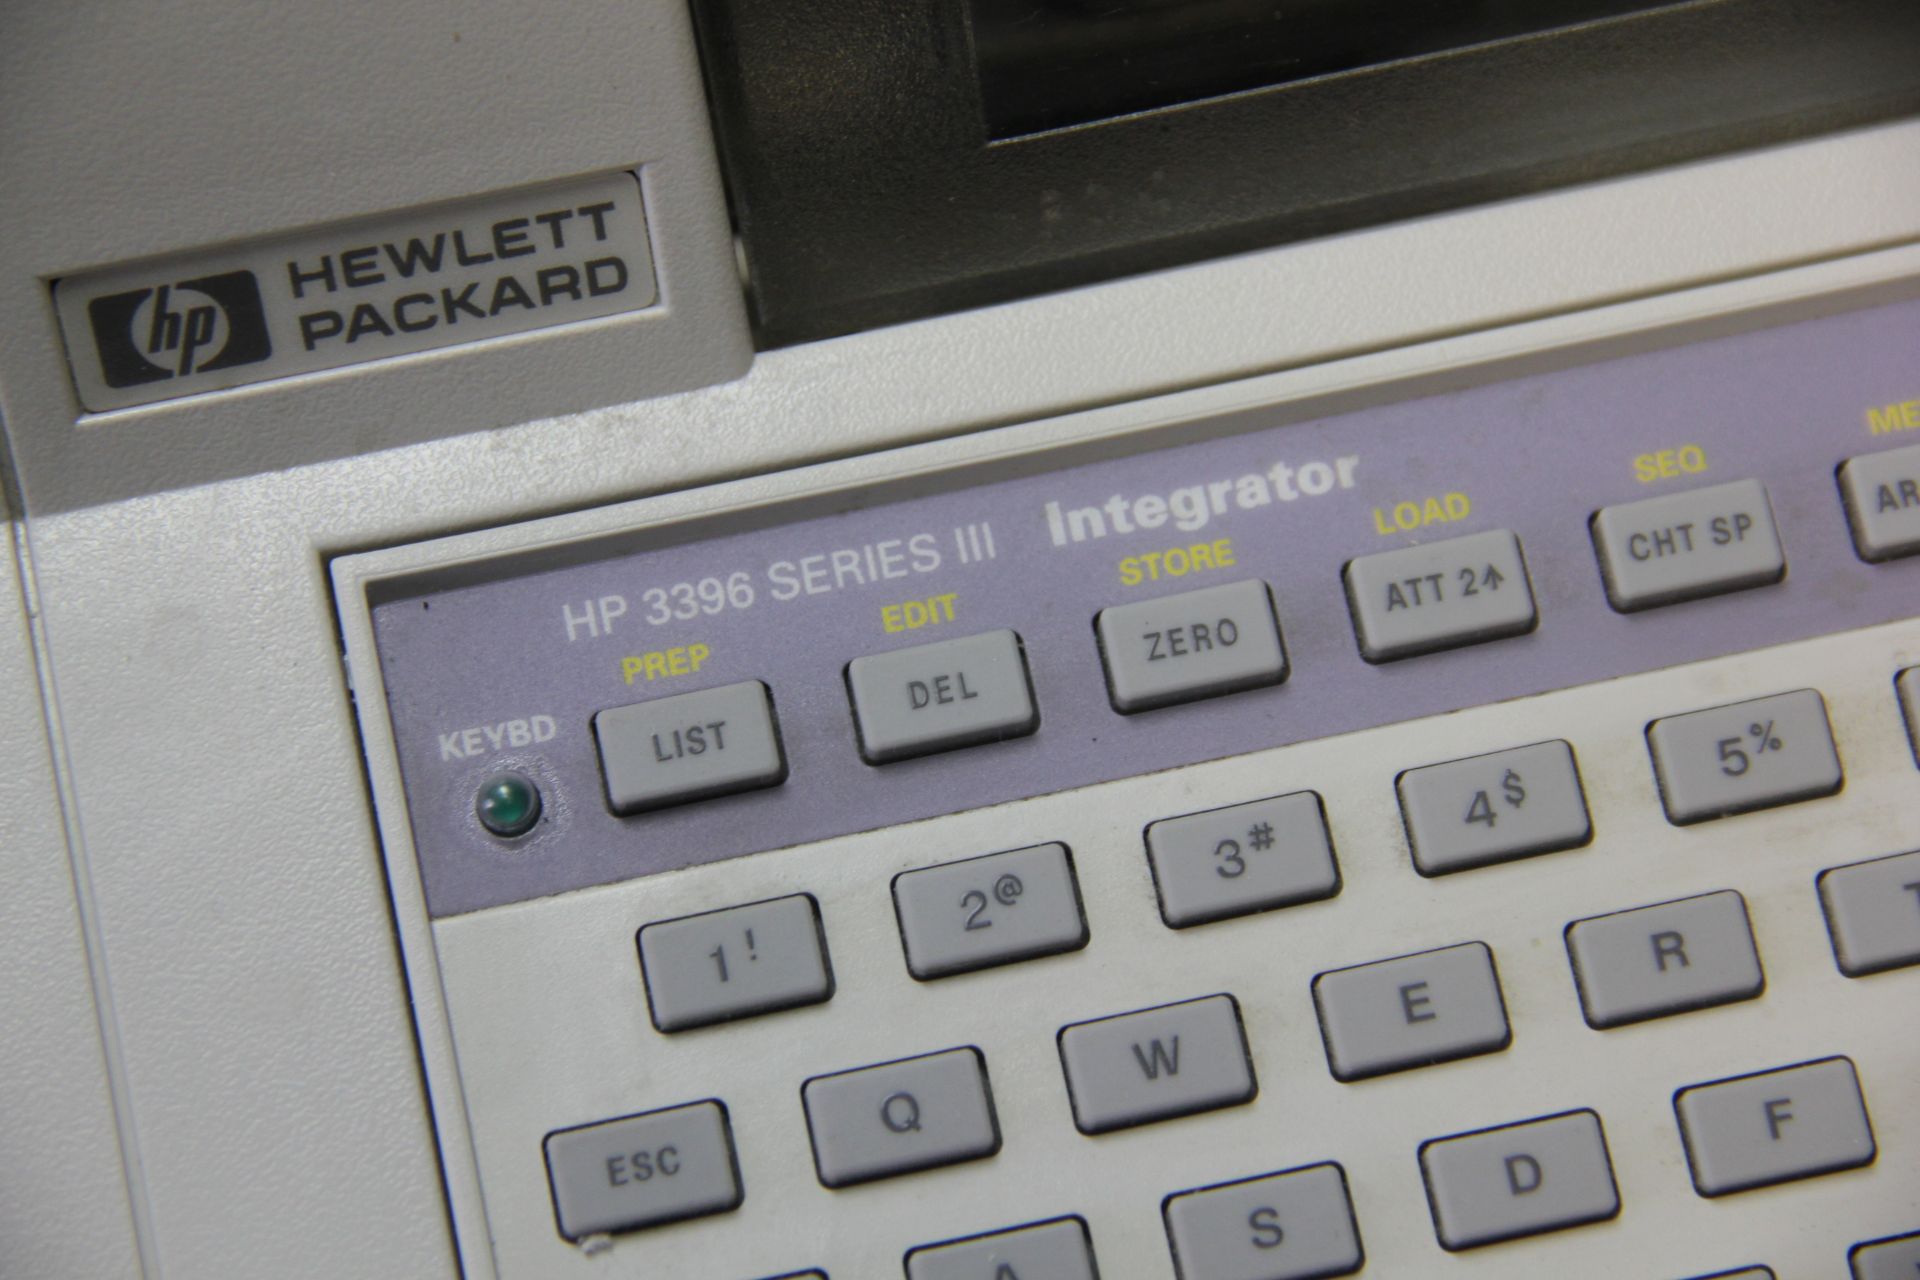 HP 3396 SERIES III GAS CHROMATOGRAPH INTEGRATOR - Image 6 of 6